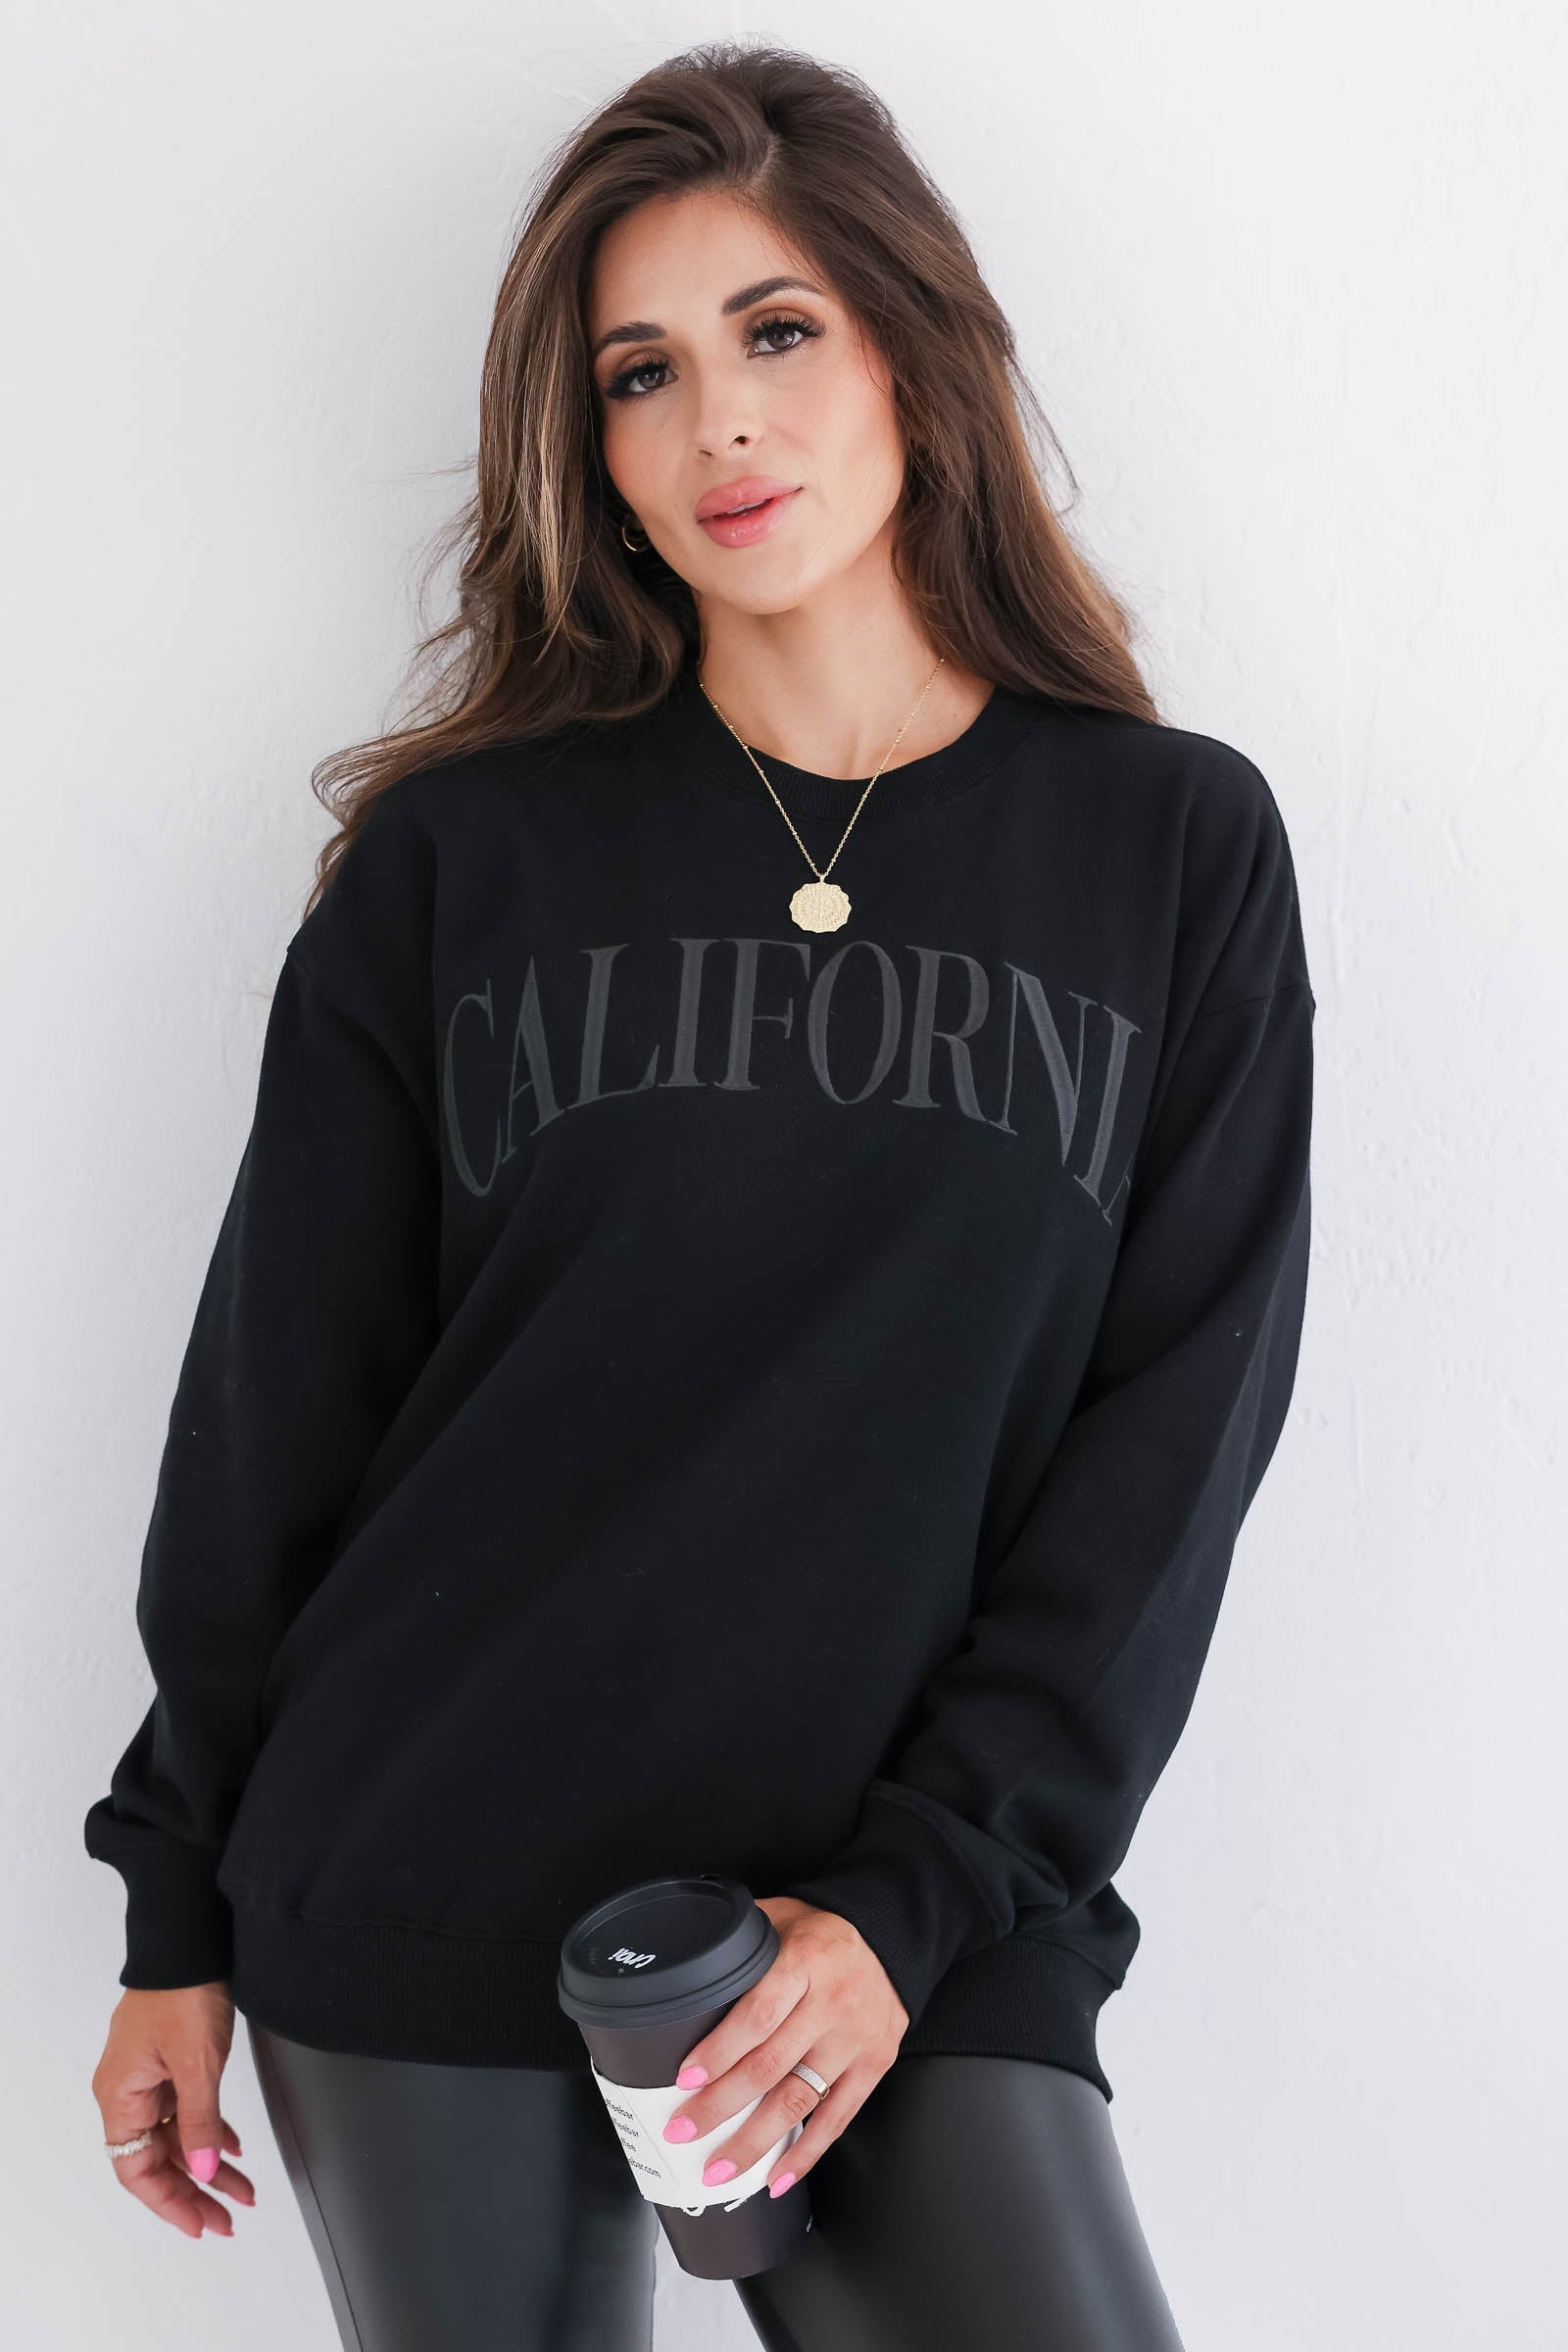 "California" Embroidered Sweatshirt - Black, Closet Candy, 1 